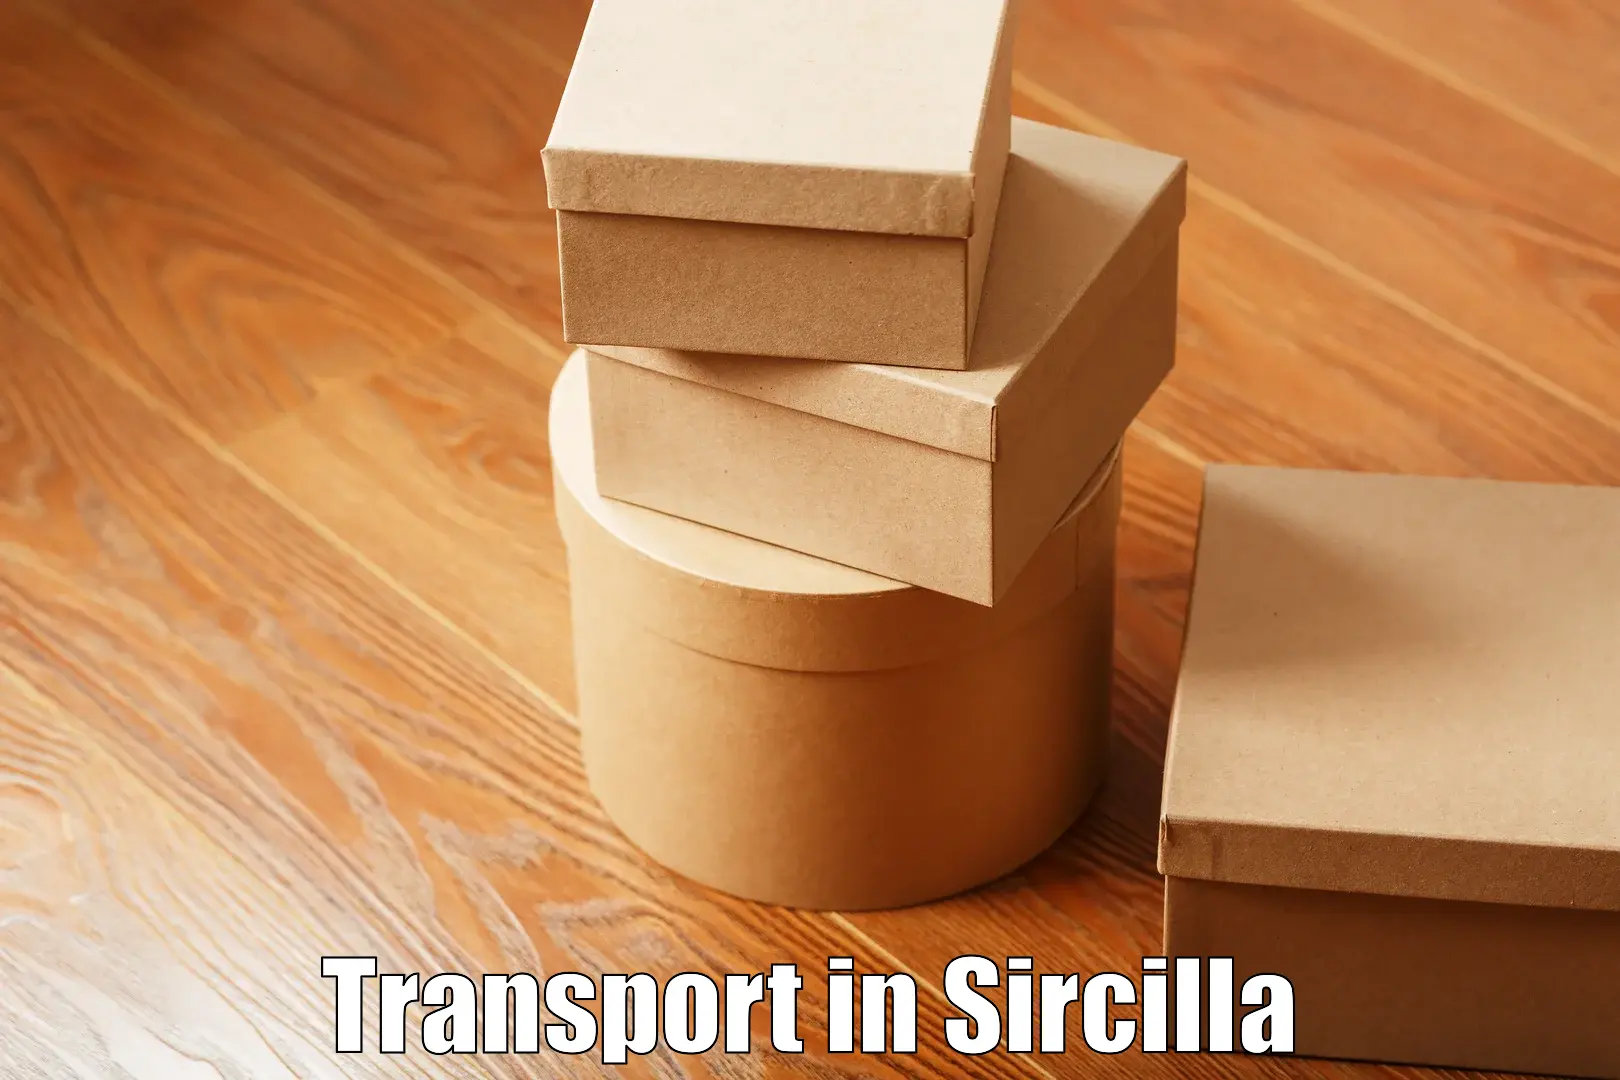 Container transport service in Sircilla